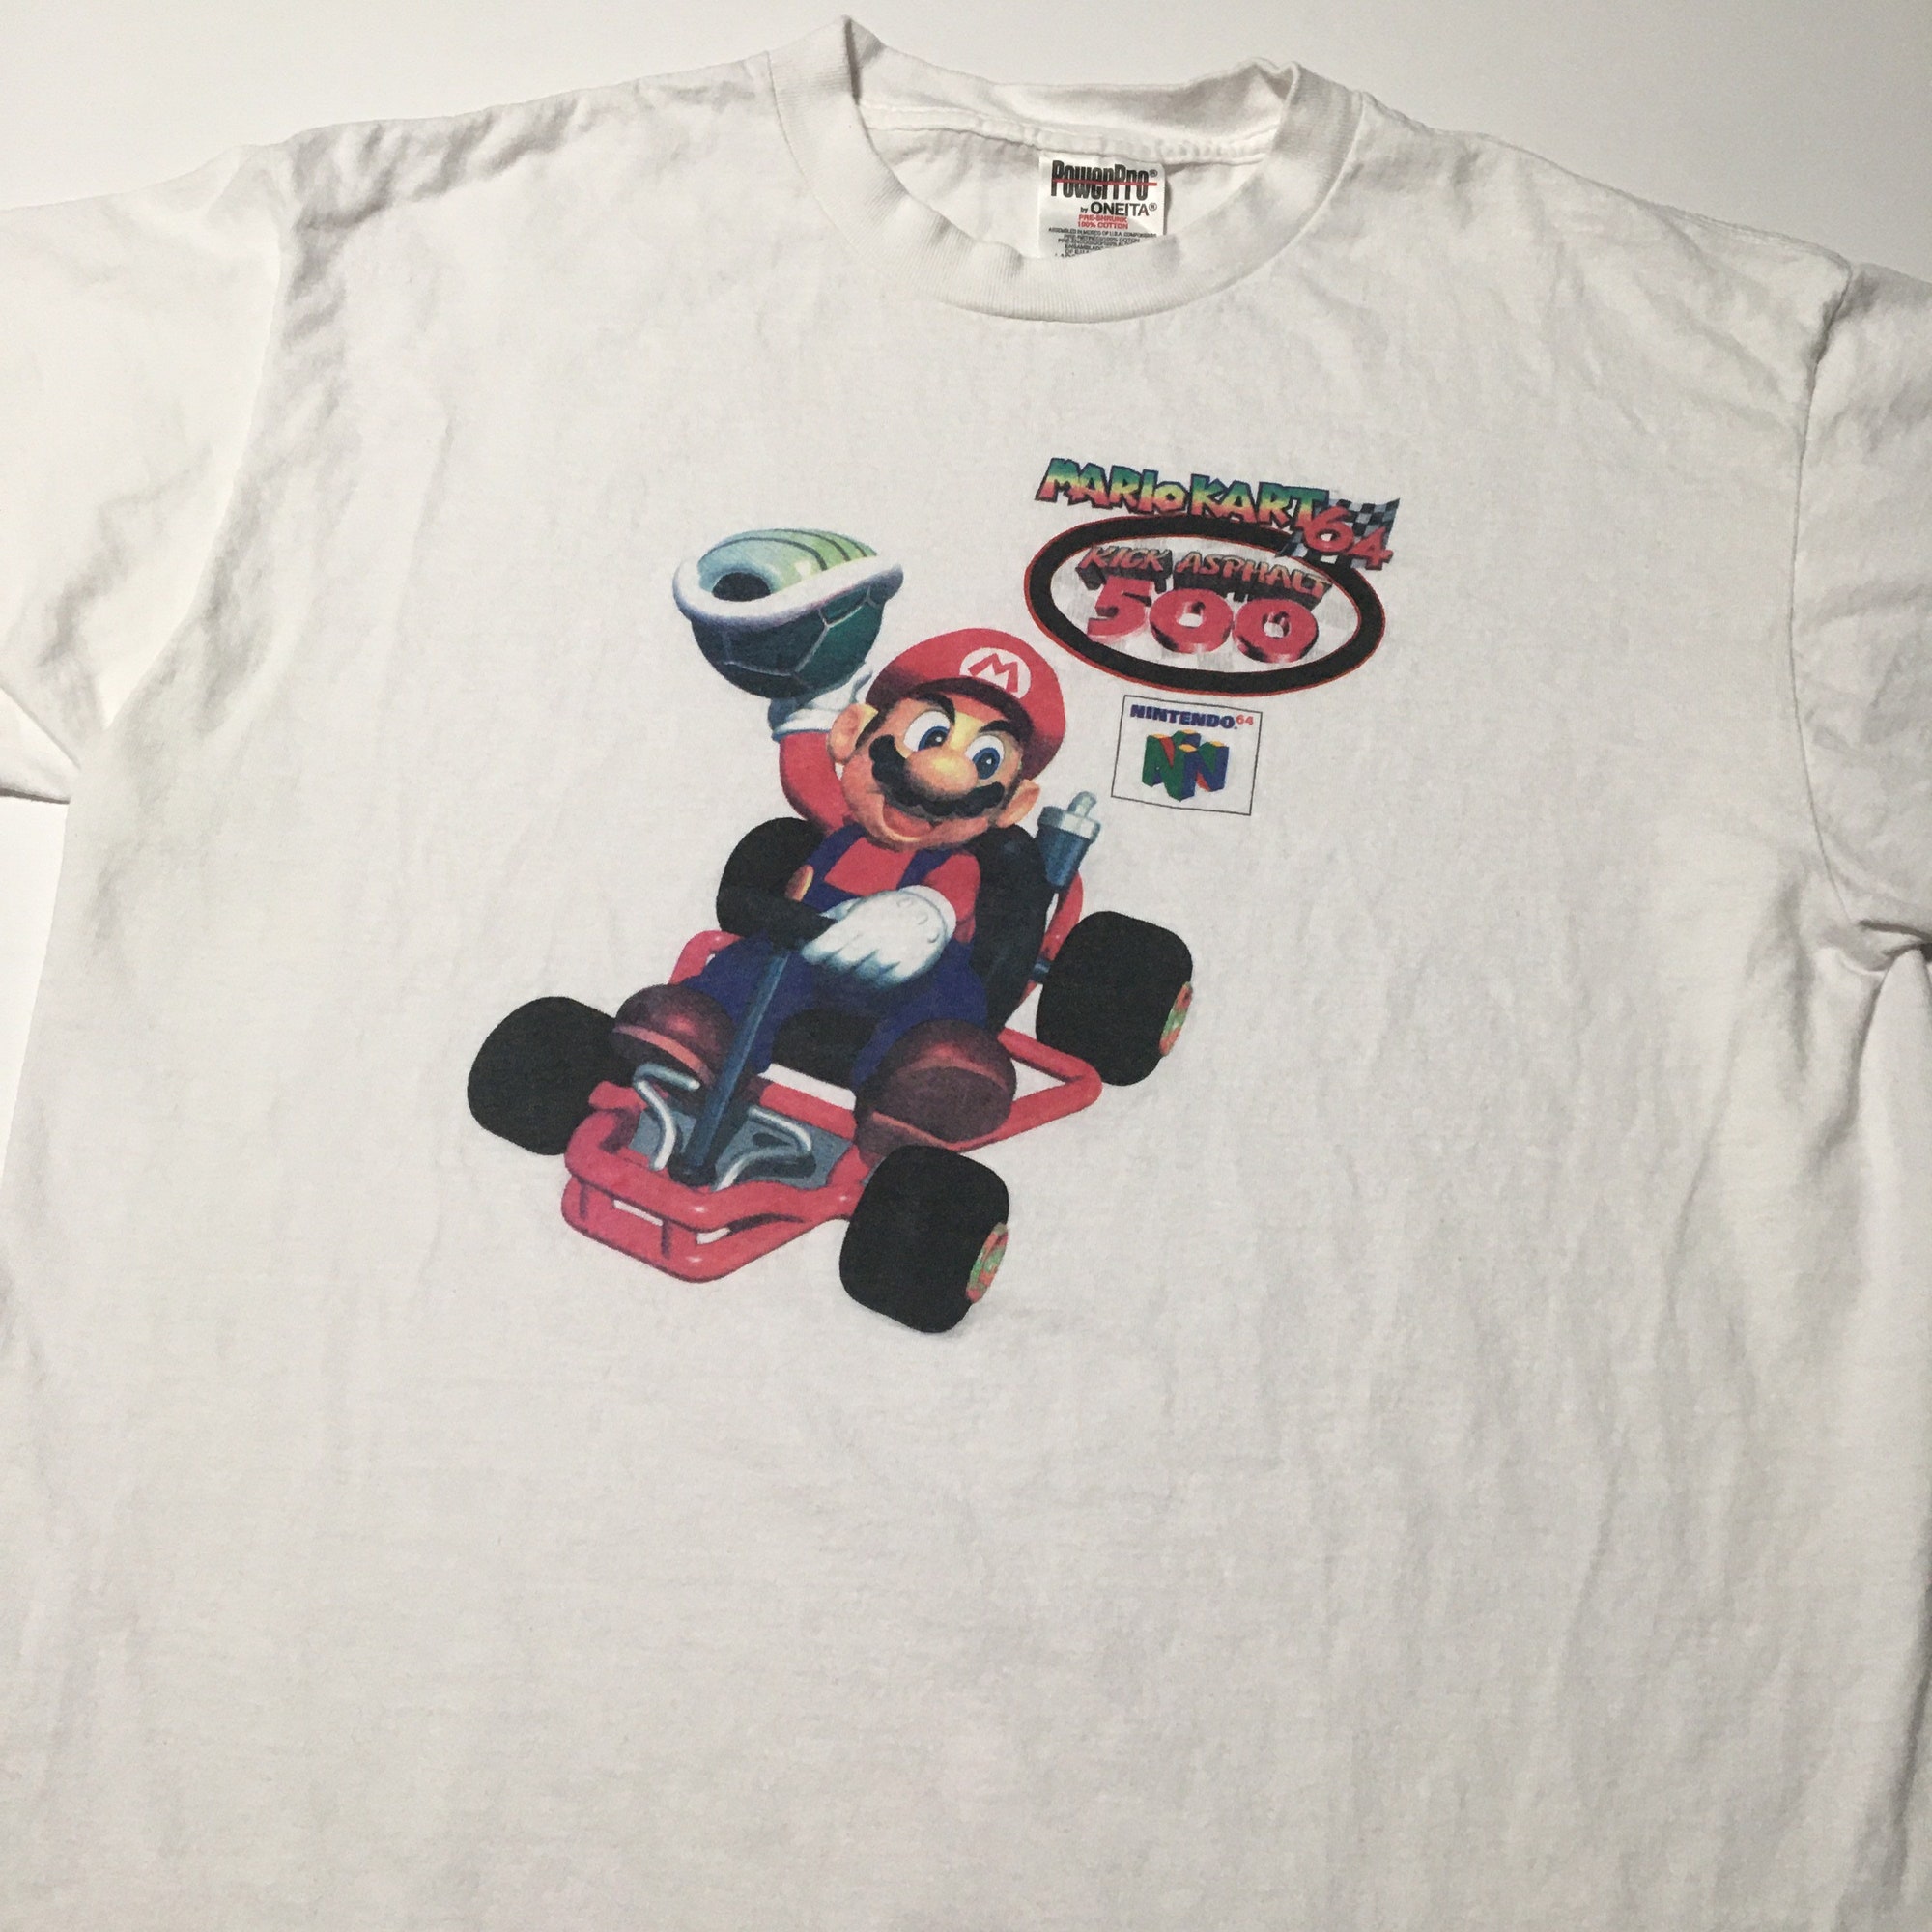 Vintage 90s Nintendo 64 Mario Kart T-Shirt, Kick Asphalt 500, N64 Video Game